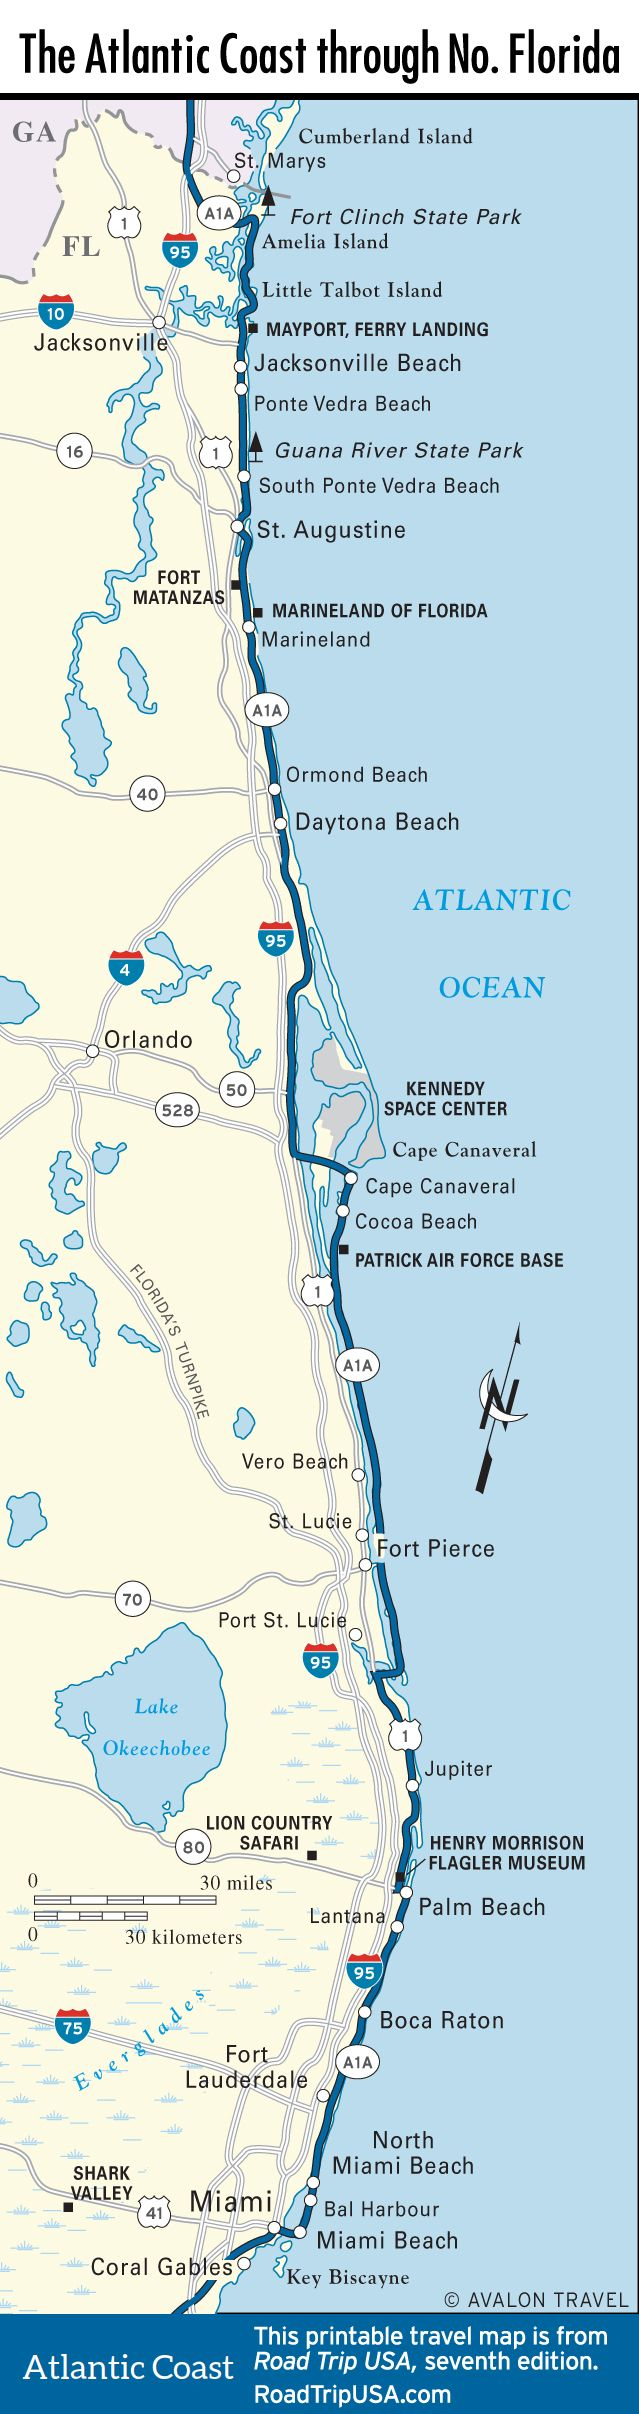 Map Of The Atlantic Coast Through Northern Florida. | Florida A1A - Best Beaches Gulf Coast Florida Map